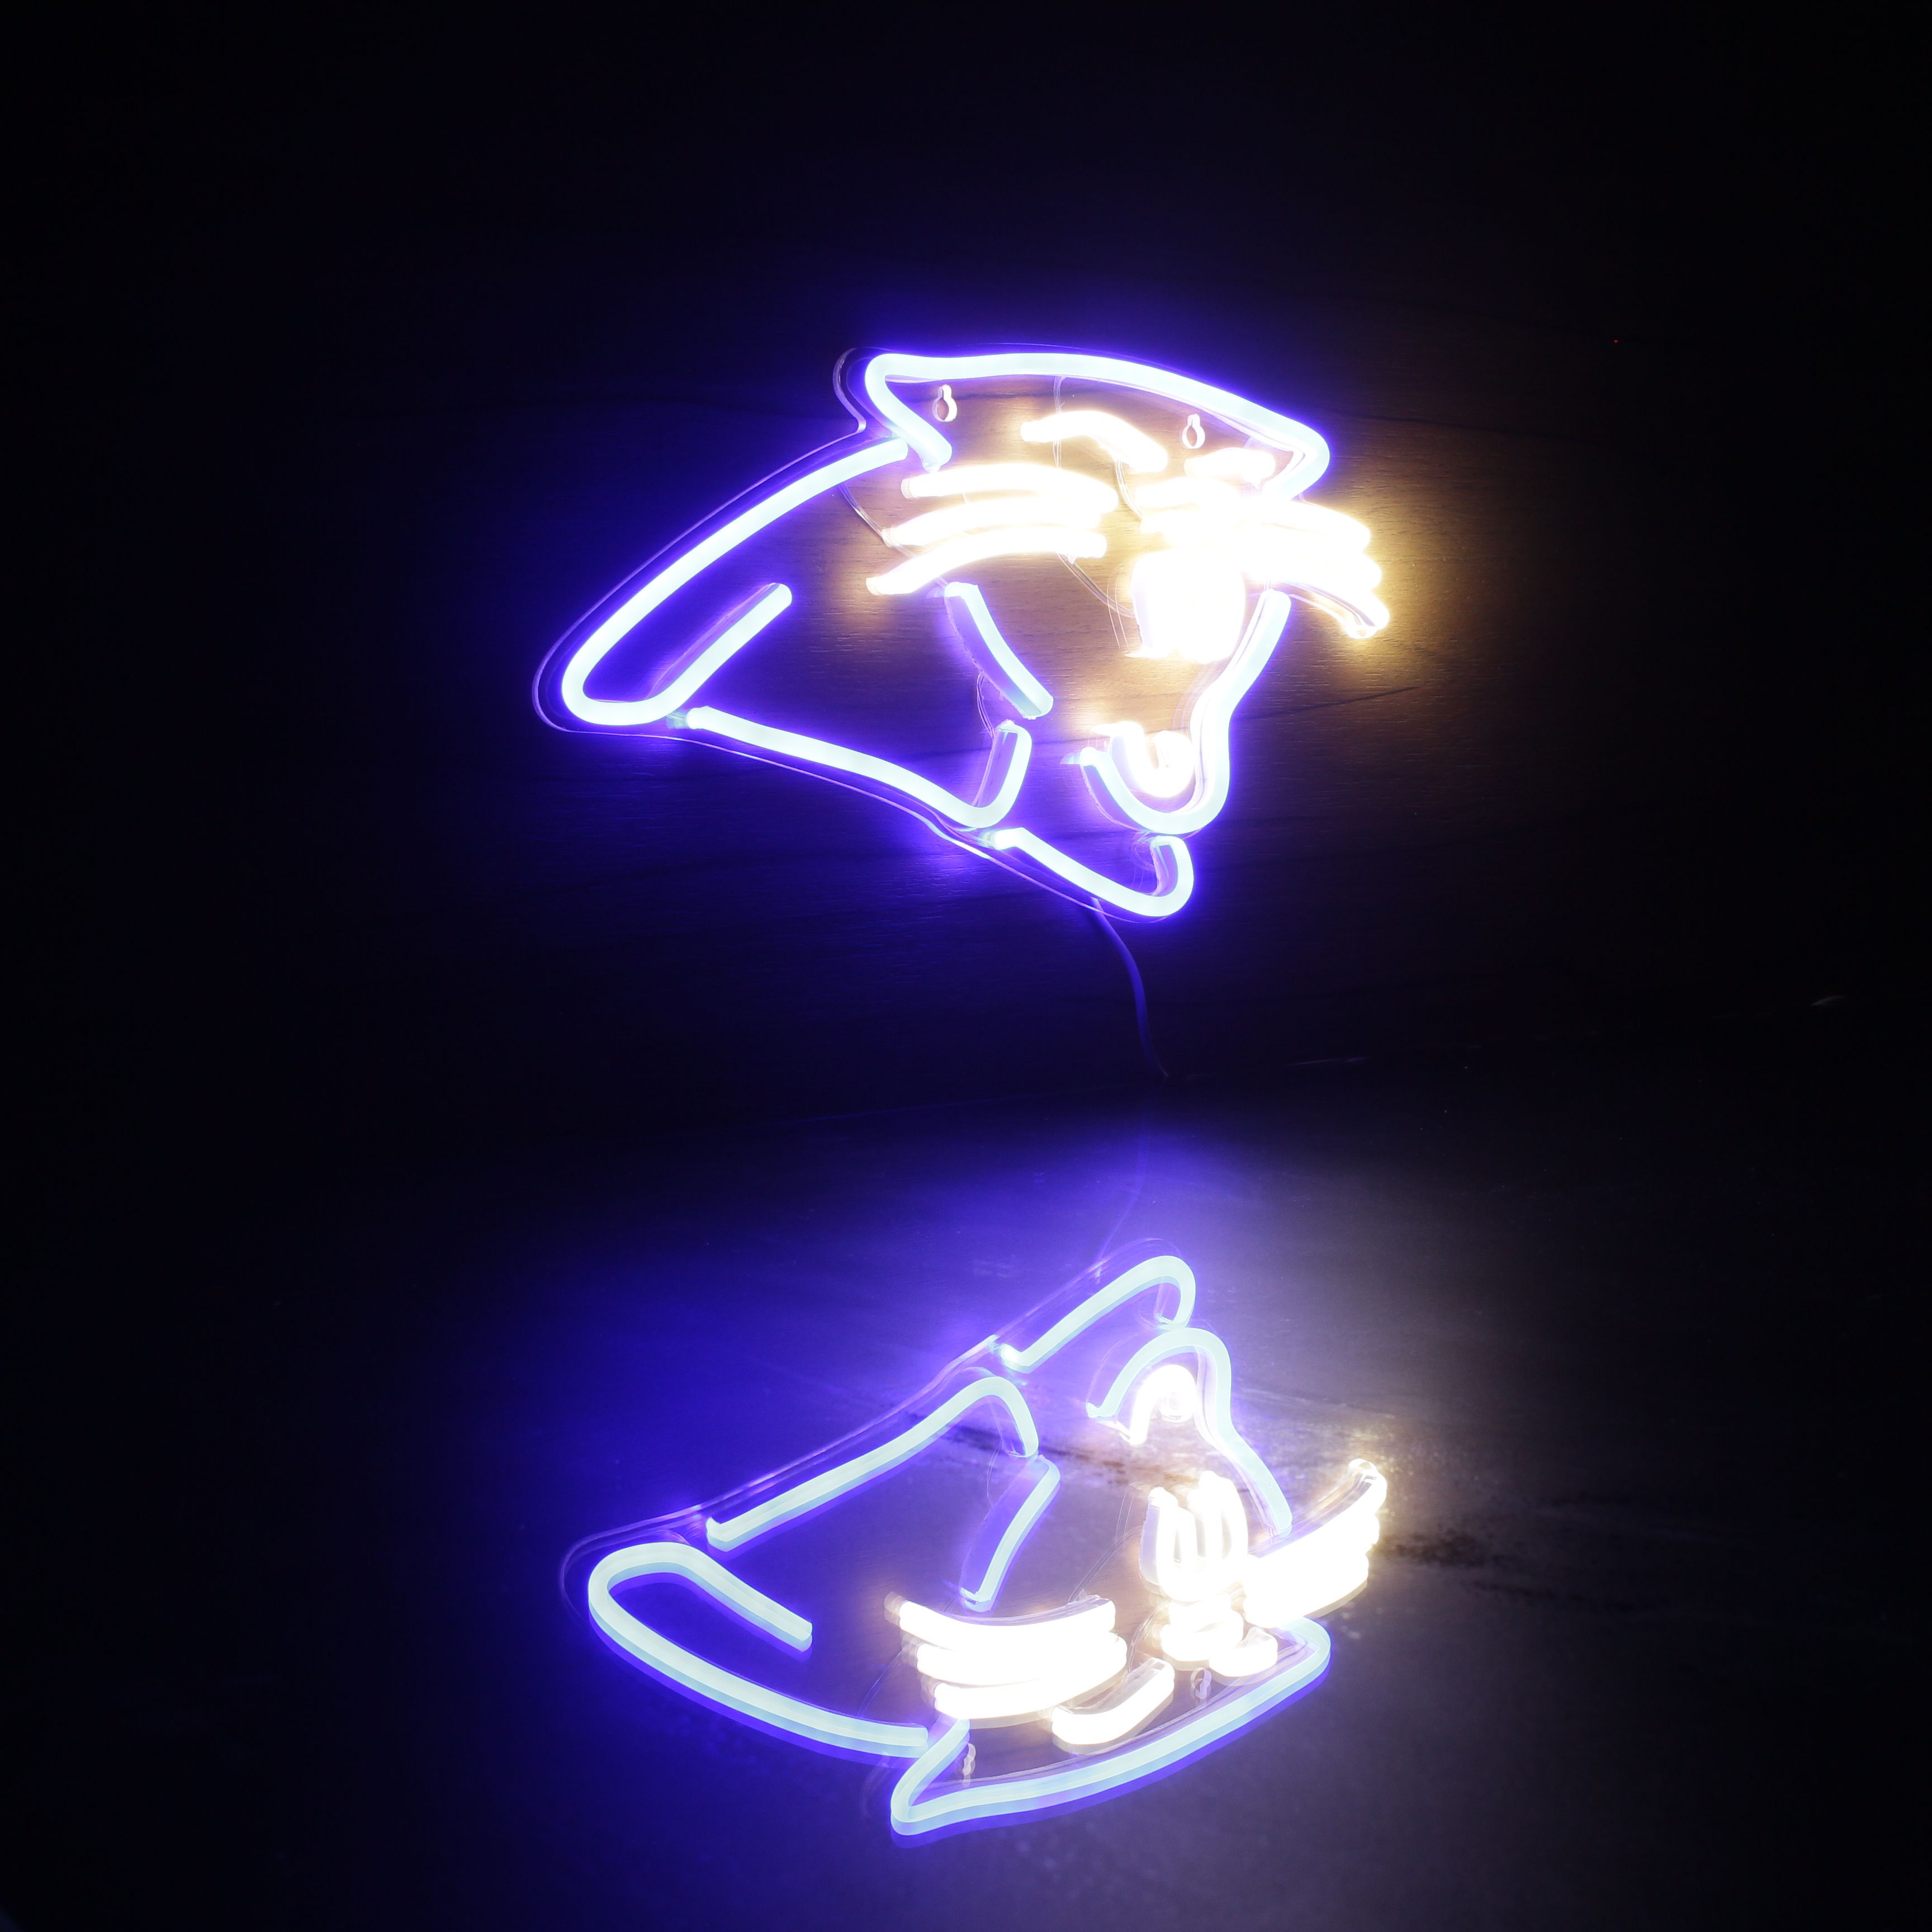 Carolina Panthers Neon-Like Flex LED Sign Dual Color - ProLedSign